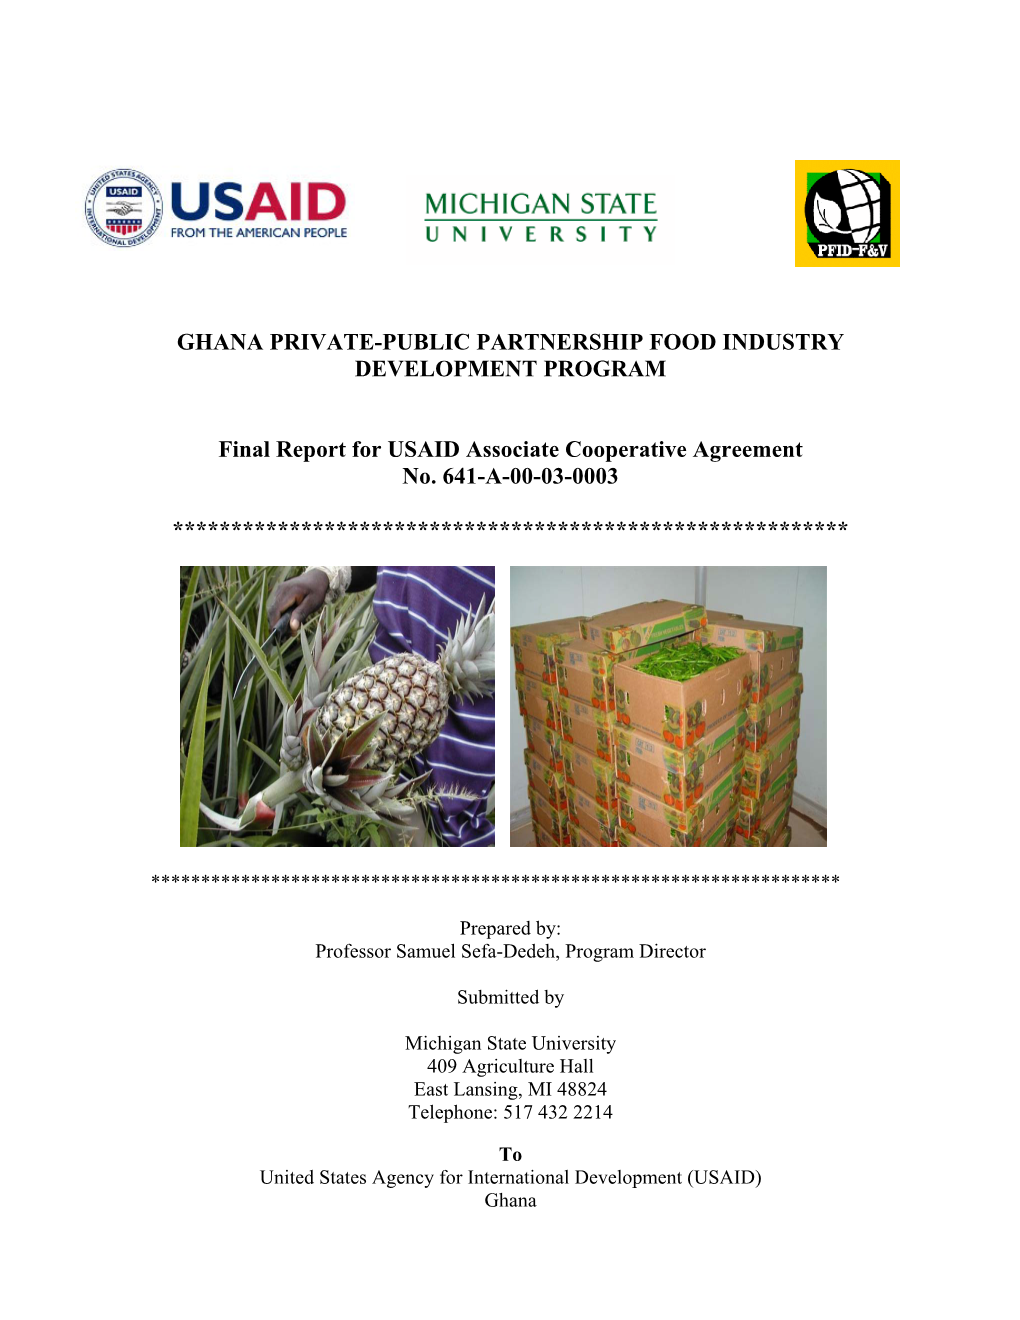 Ghana Private-Public Partnership Food Industry Development Program